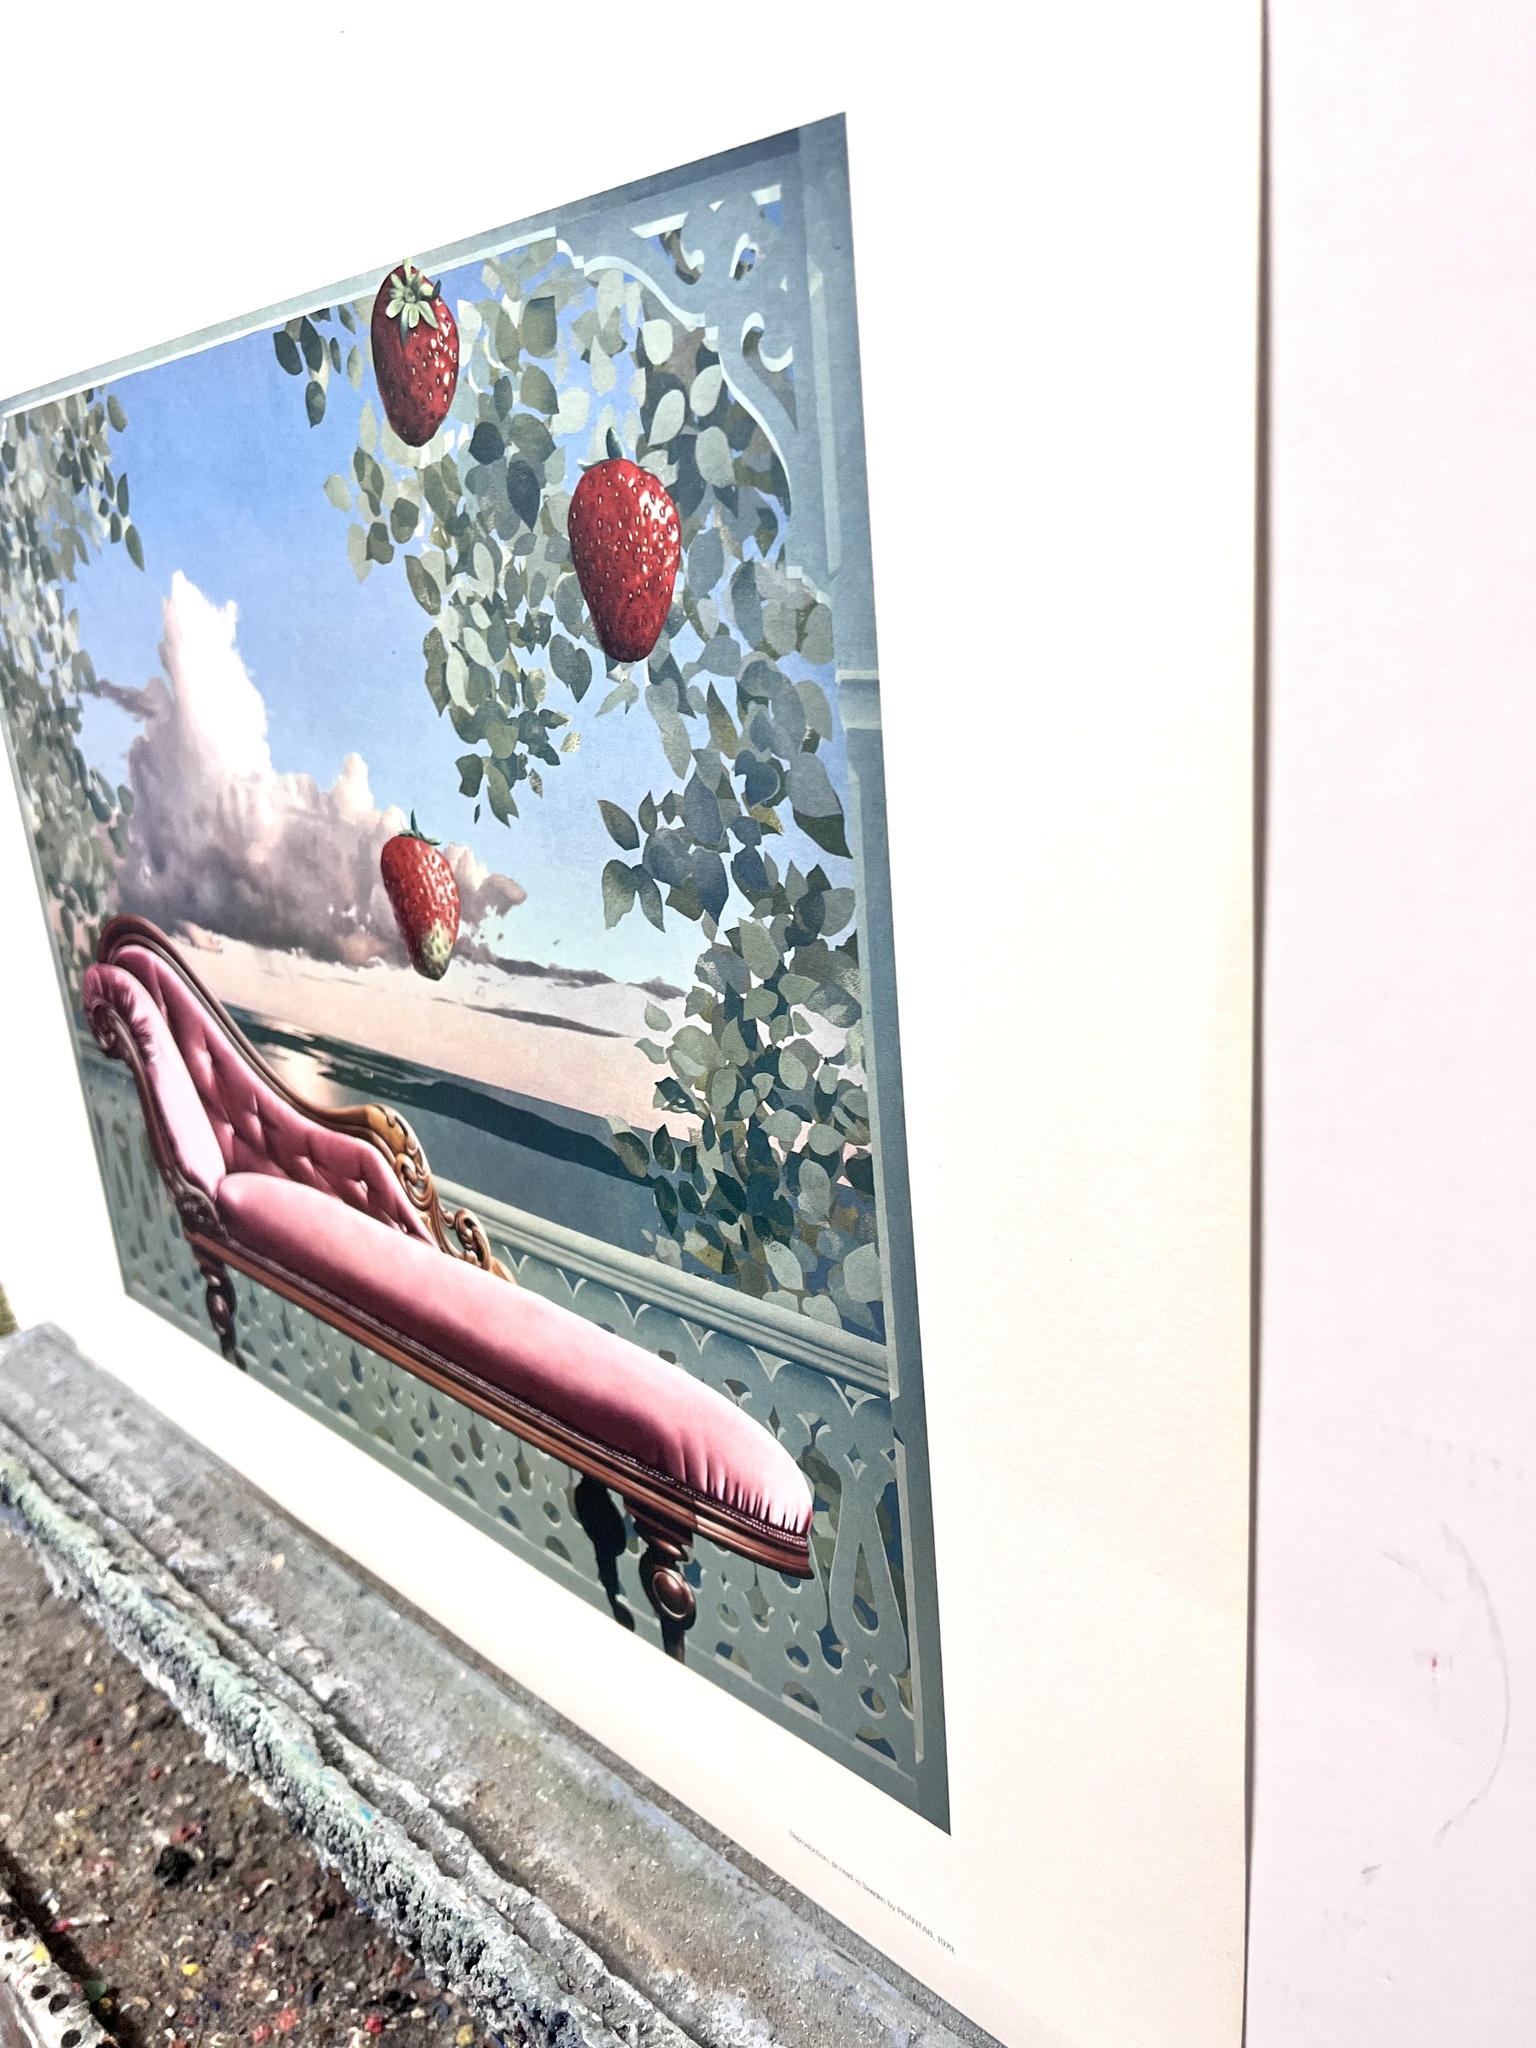 "The Strawberry Serenade" Reproduktion av Howard Brookes ur Marstrandssviten. 45x60 cm